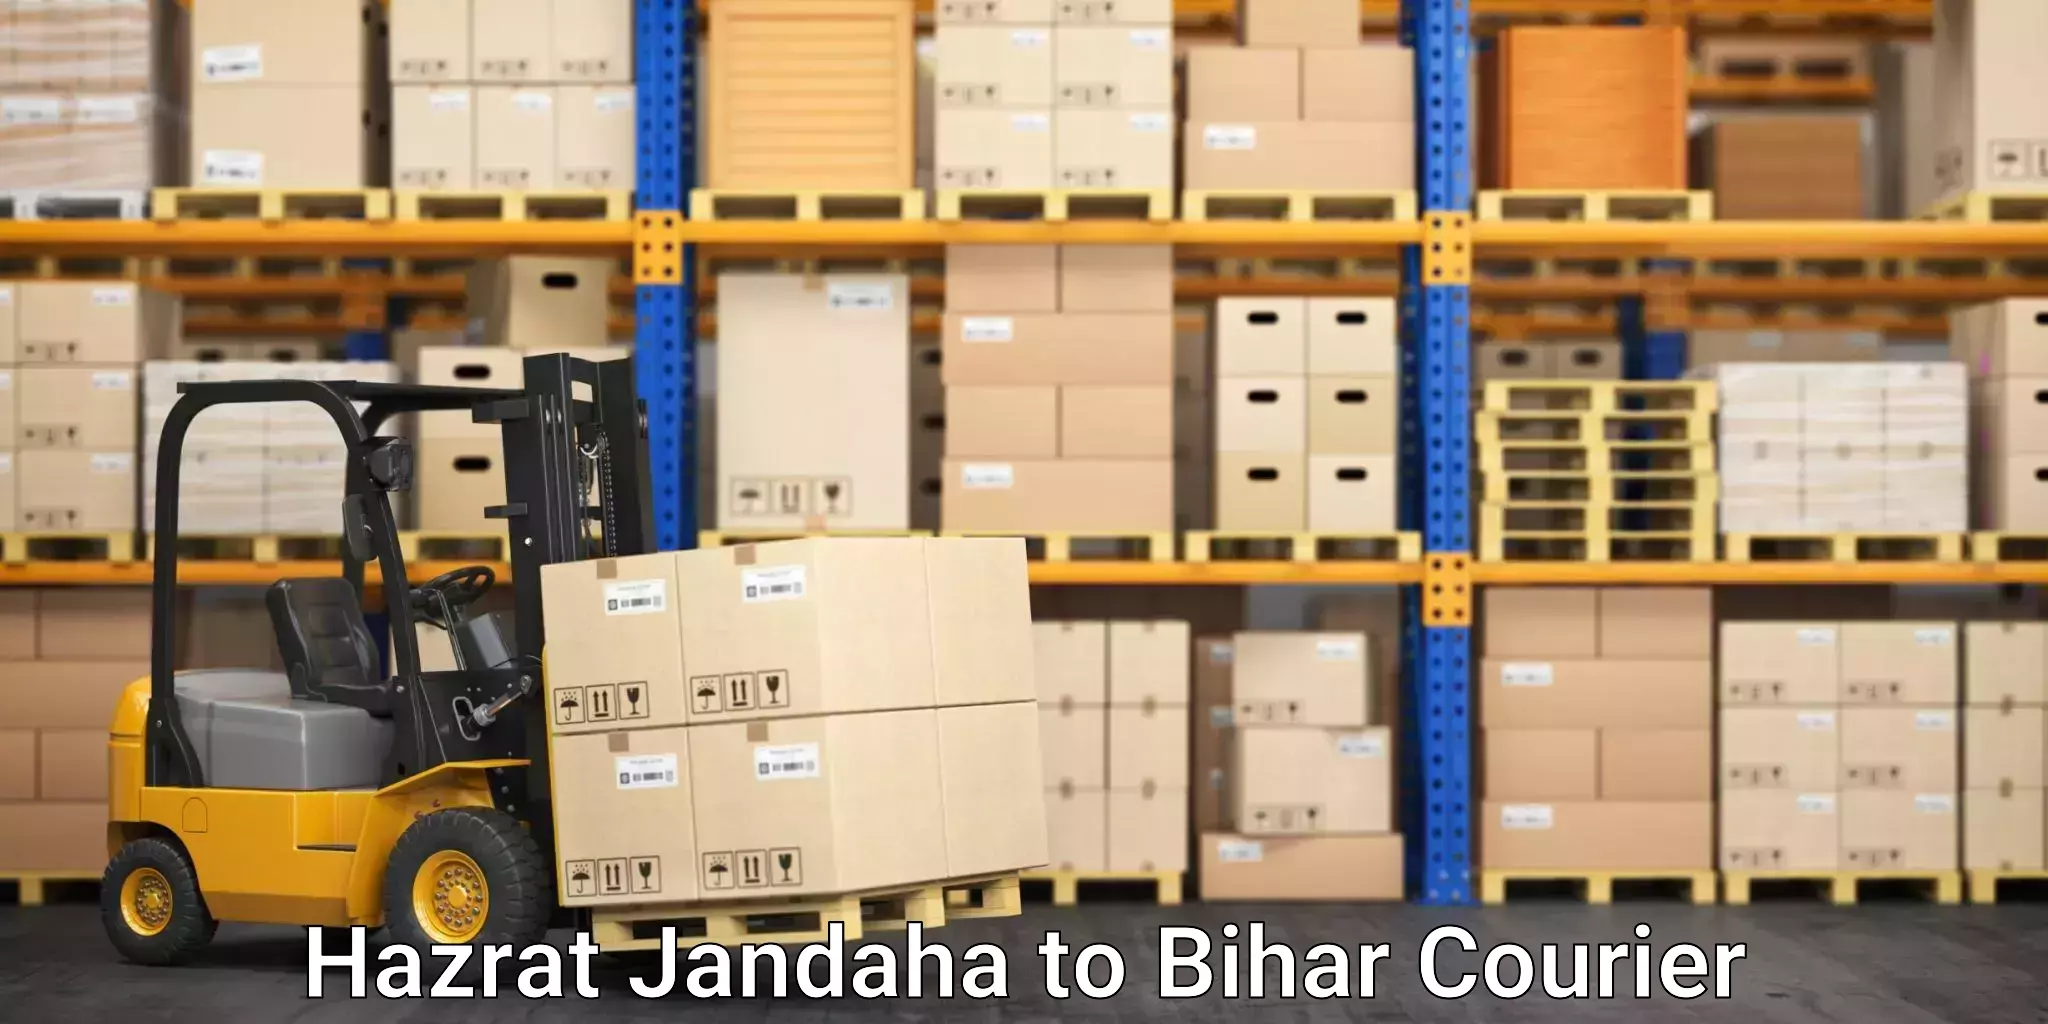 Professional moving company Hazrat Jandaha to Makhdumpur